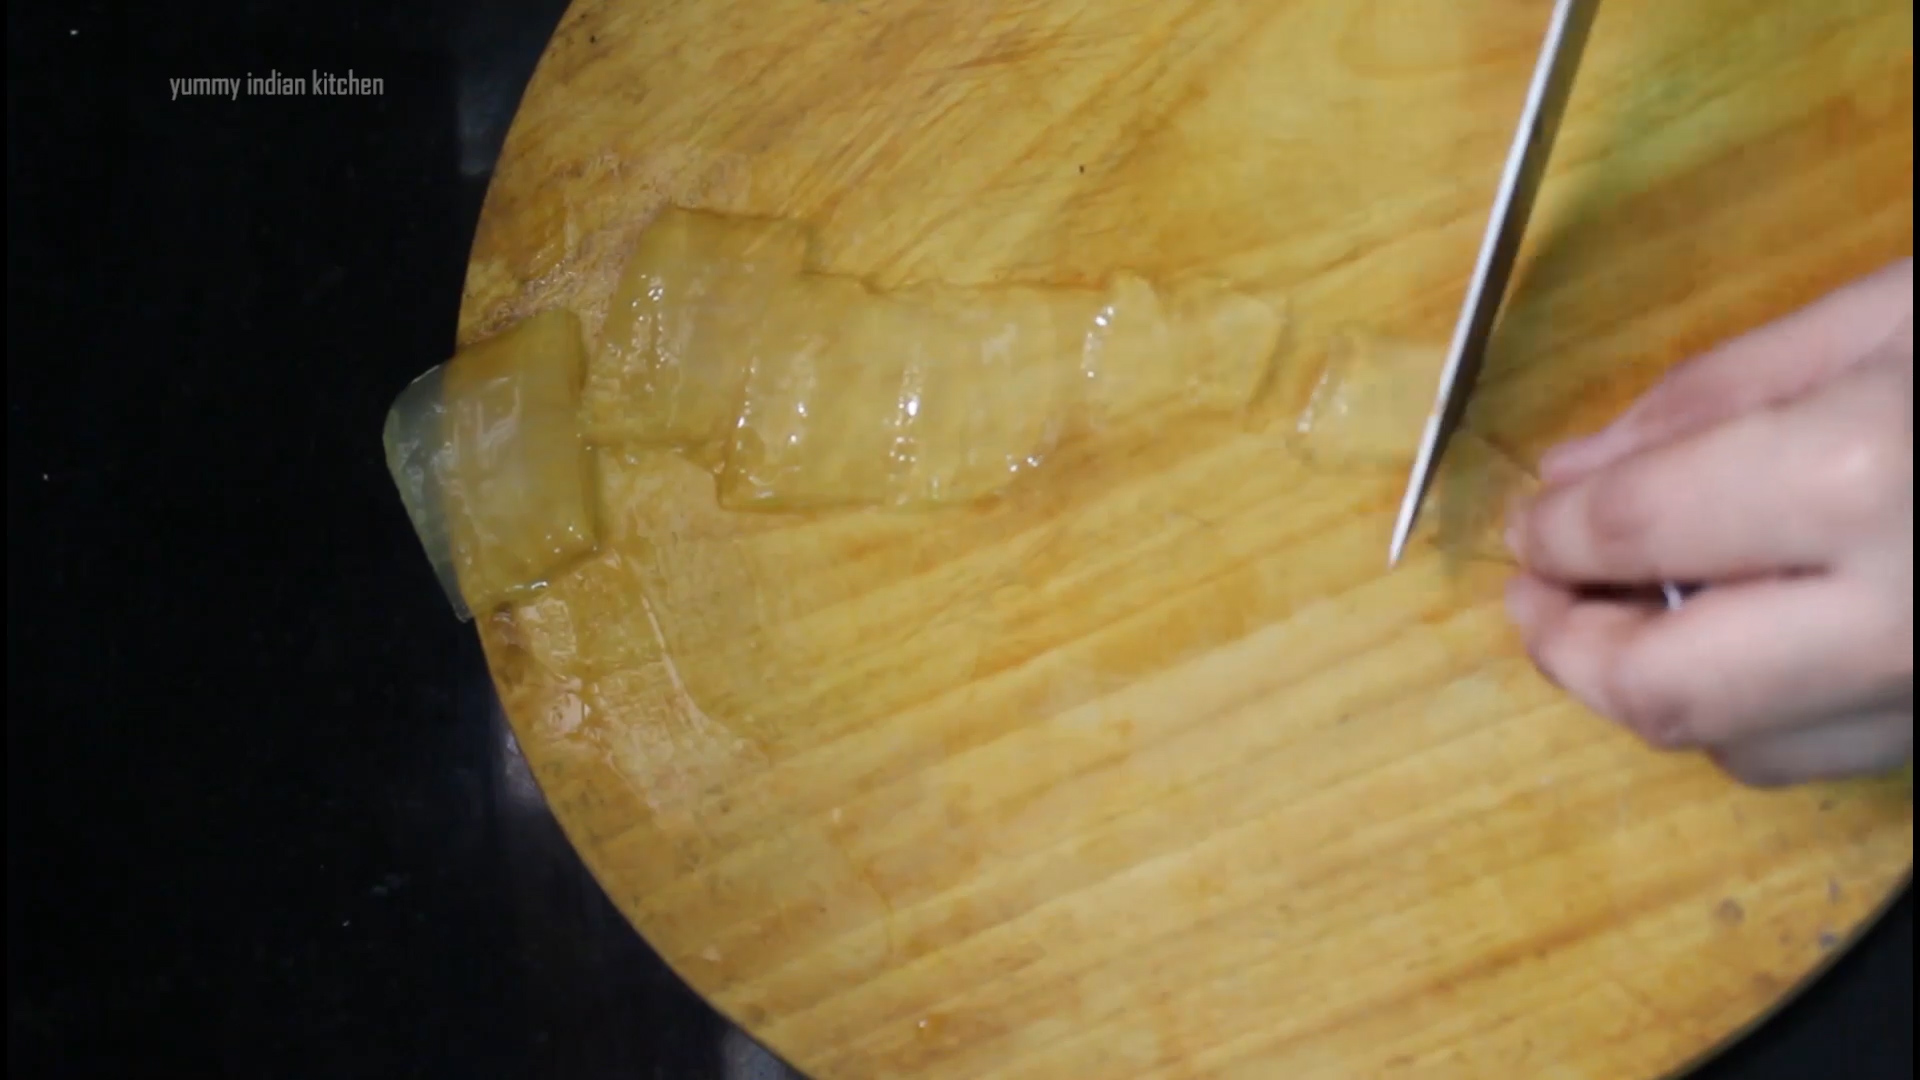 cutting the homemade aloe vera gel into cubes